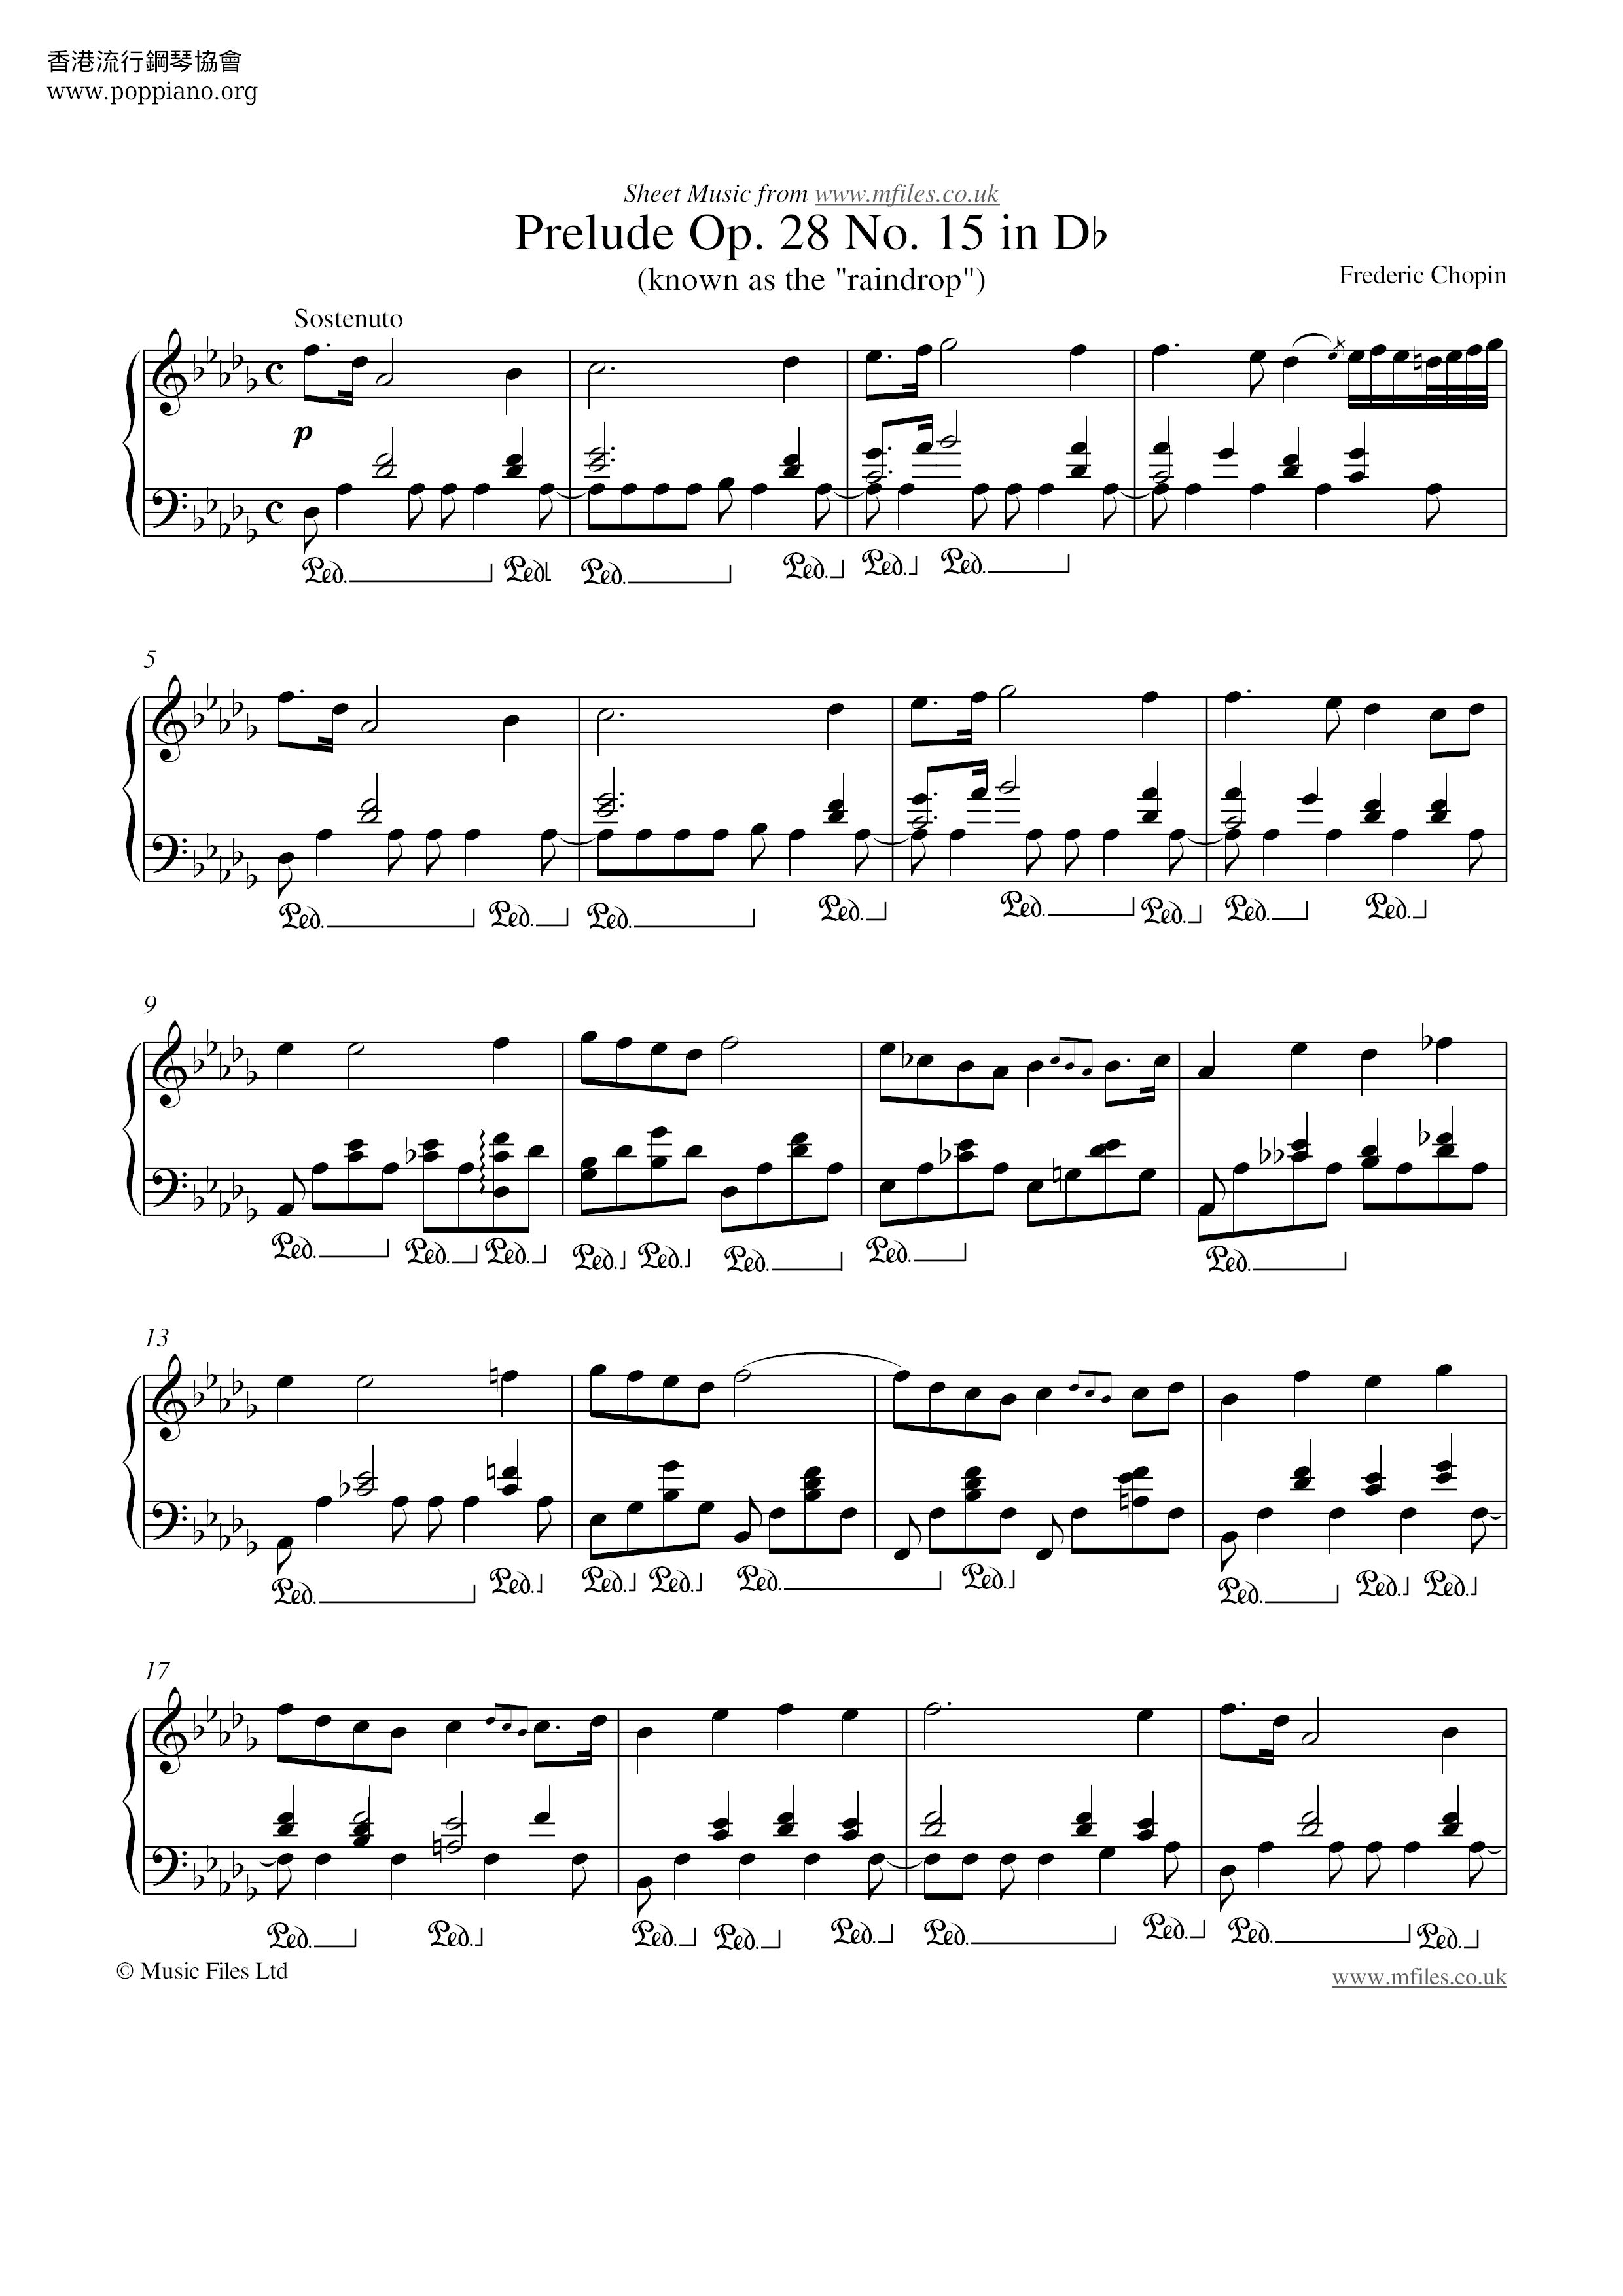 Op. 28, Prelude No. 15 Raindrop 雨滴前奏曲ピアノ譜